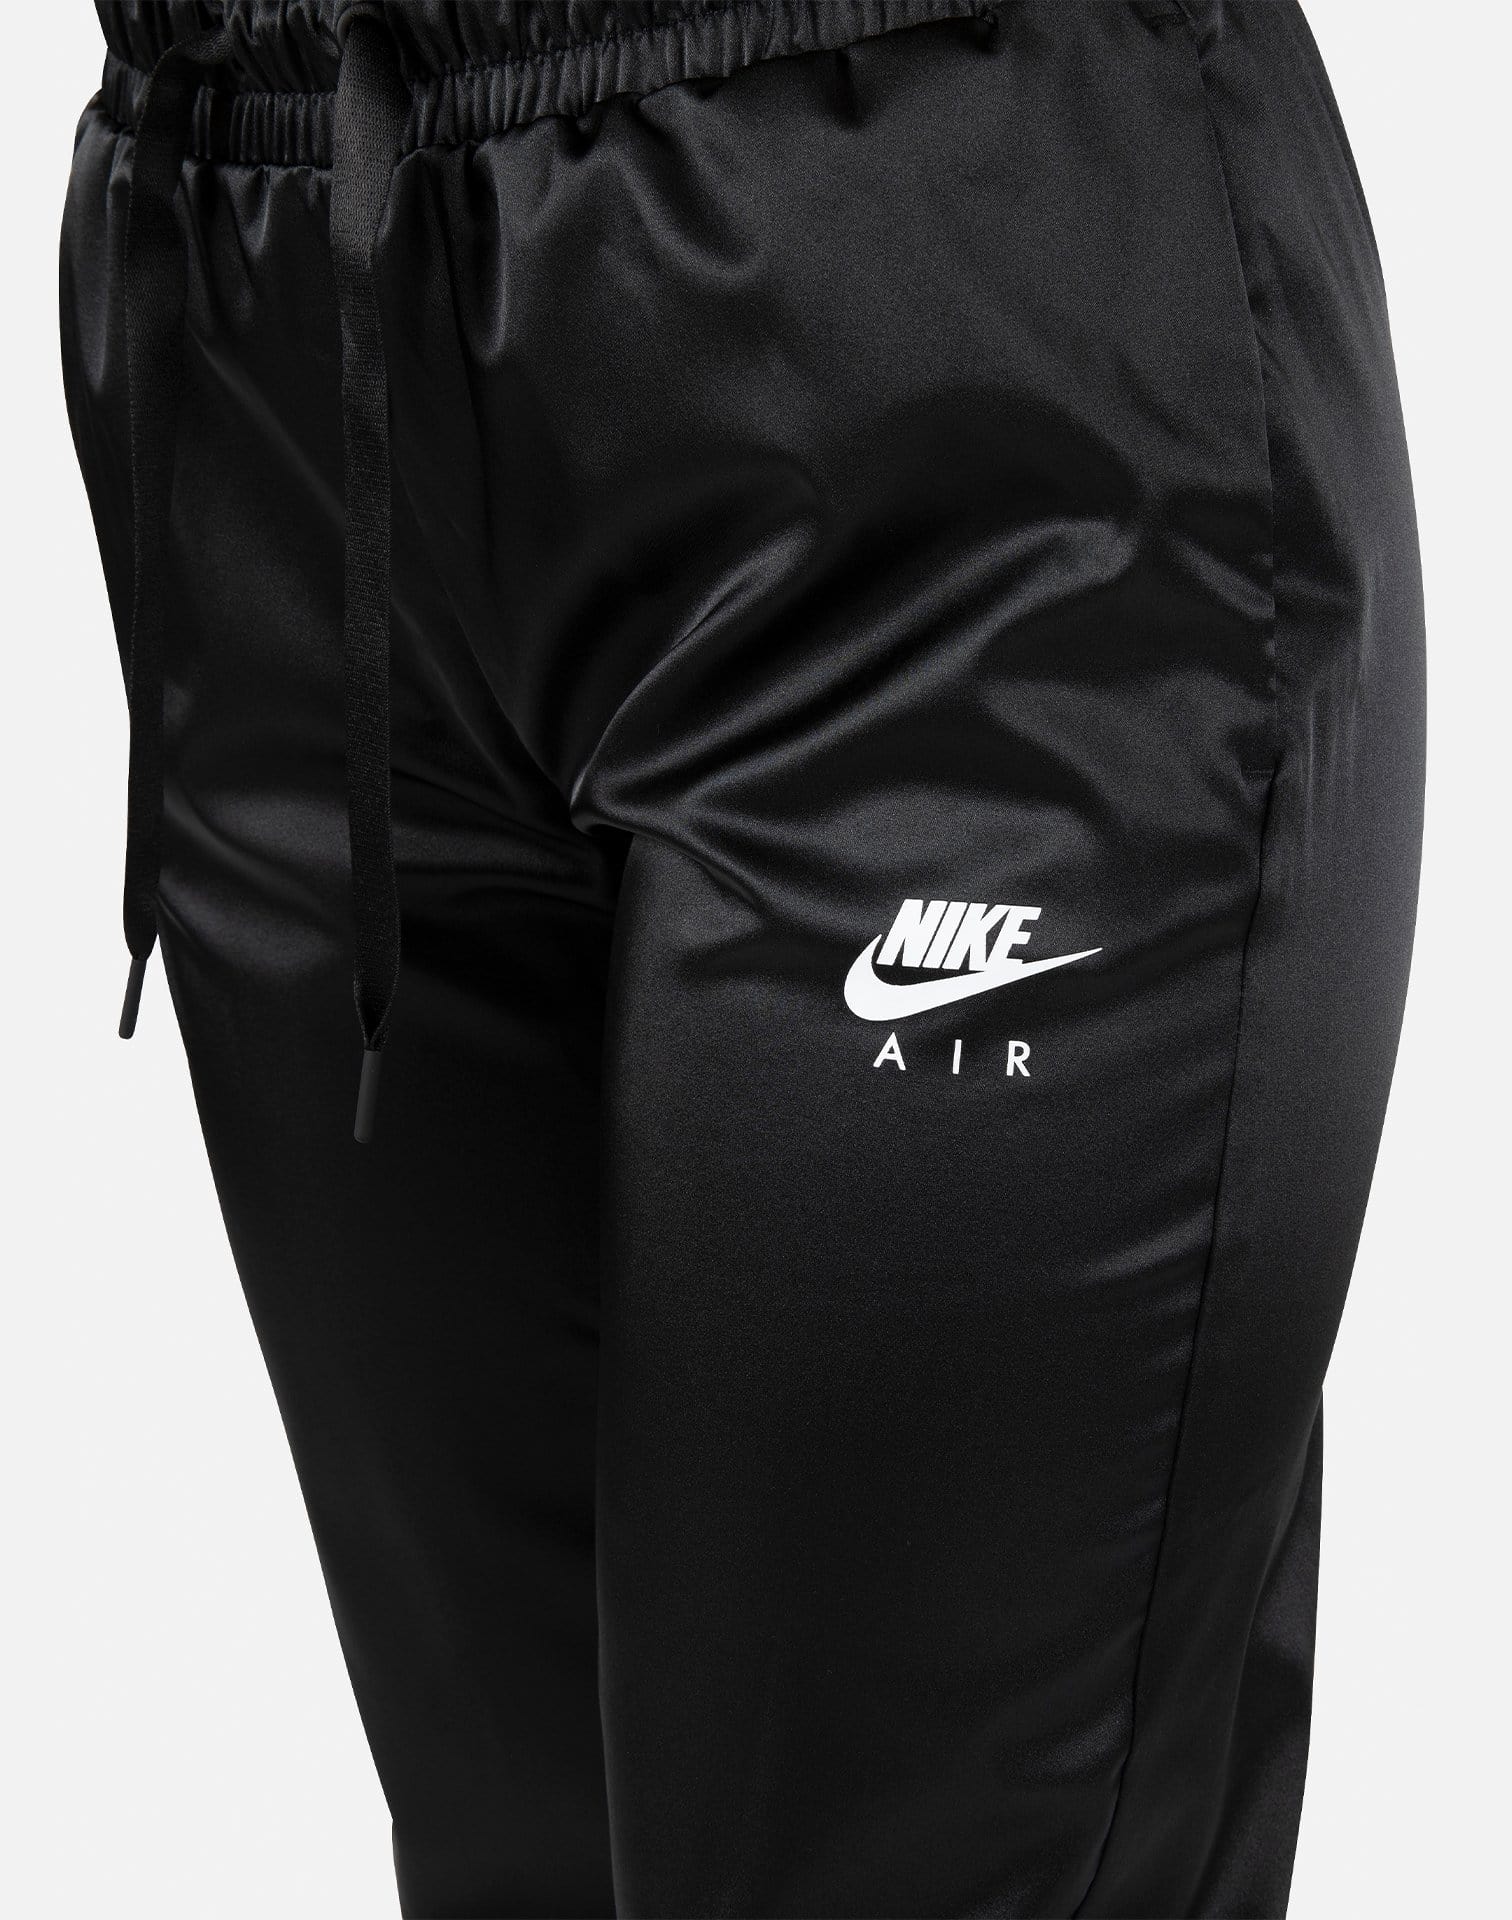 Nike Womens Track Pants - Buy Nike Womens Track Pants Online at